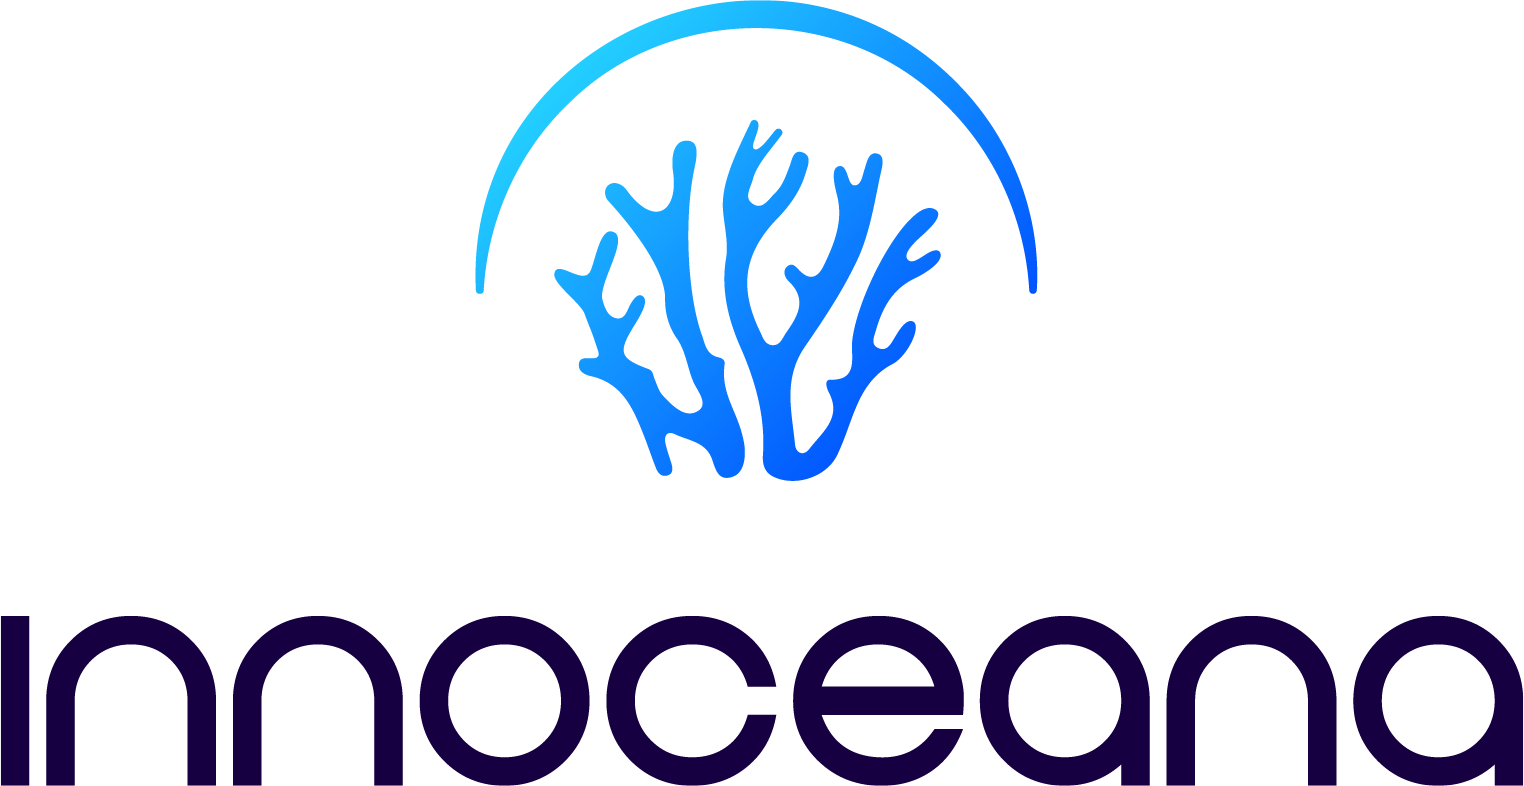 Innoceana logo